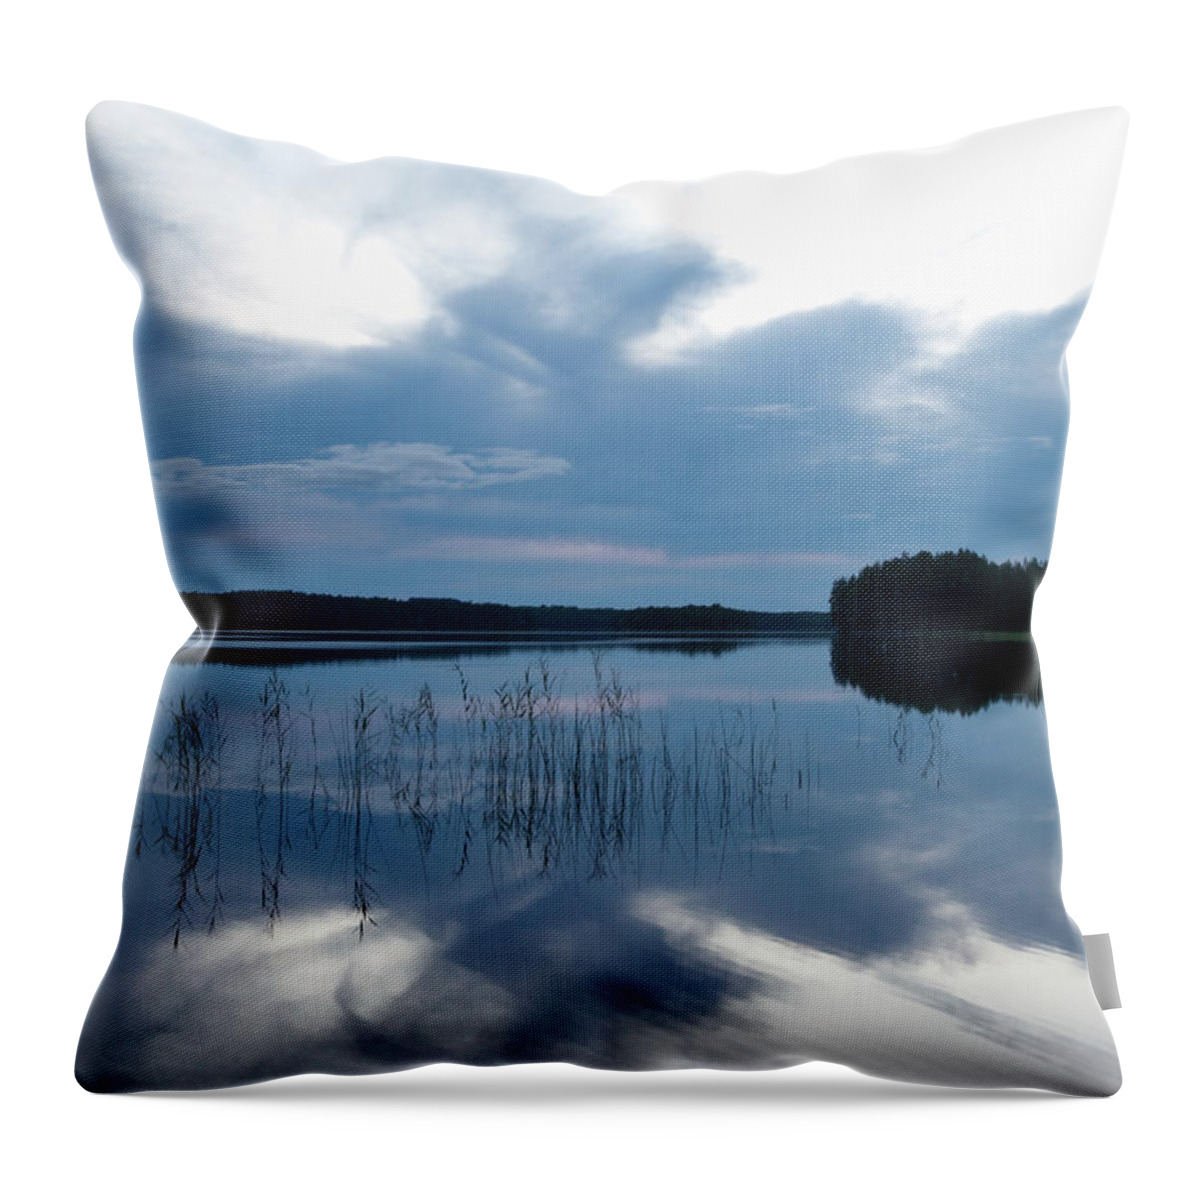 Jouko Lehto Throw Pillow featuring the photograph Blue moment by Jouko Lehto